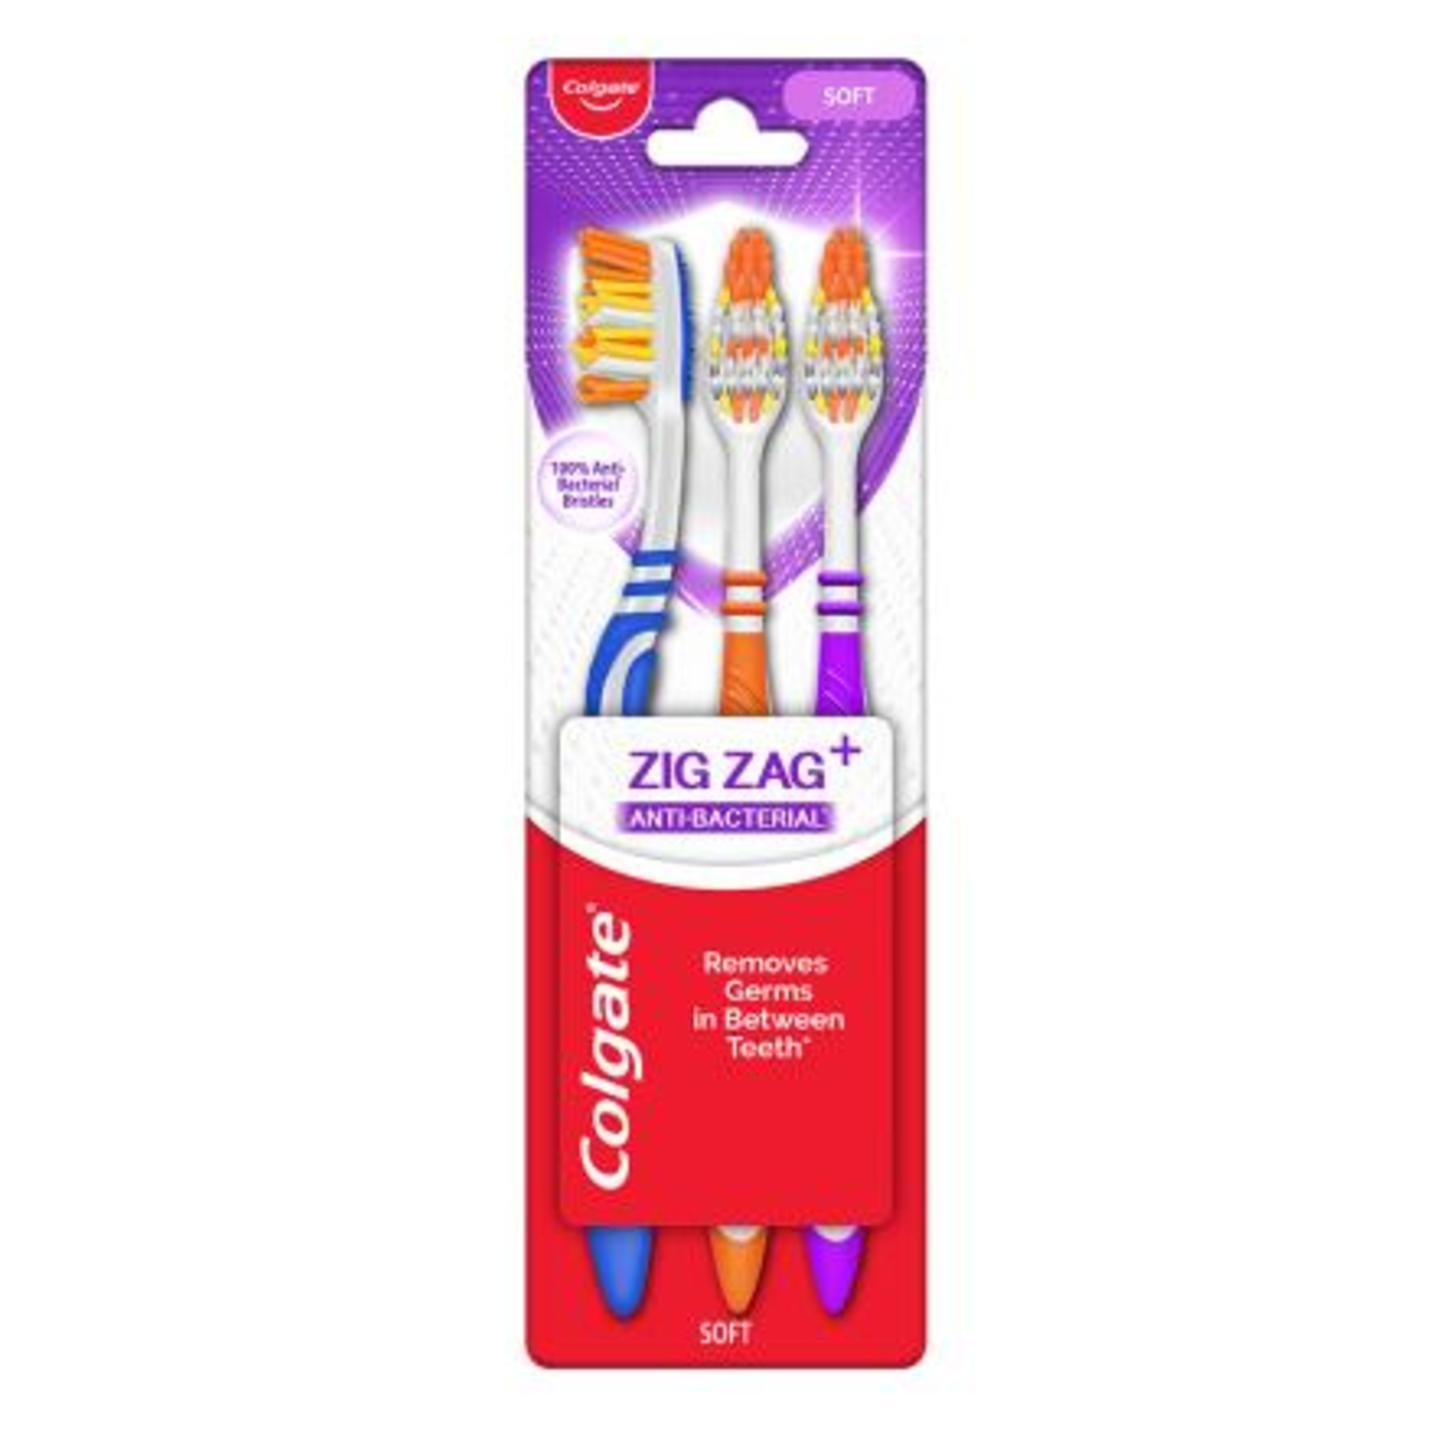 Colgate Zig Zag Soft Toothbrush Buy 2 Get 1 Free PM.BM